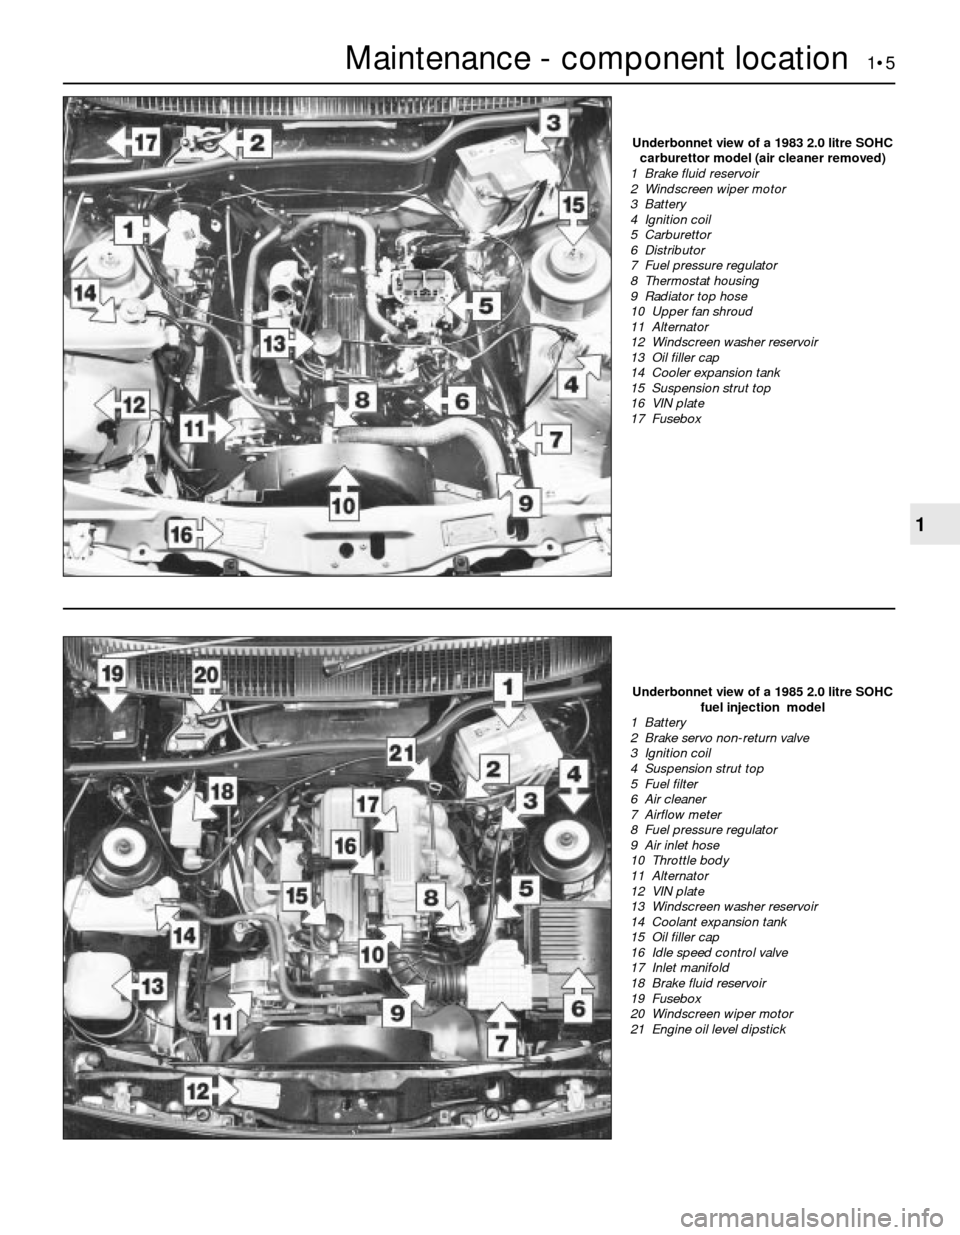 FORD SIERRA 1982 1.G Routine Manintenance And Servicing Workshop Manual Maintenance - component location  1•5
1
Underbonnet view of a 1985 2.0 litre SOHC
fuel injection  model
1  Battery
2  Brake servo non-return valve
3  Ignition coil
4  Suspension strut top
5  Fuel fi